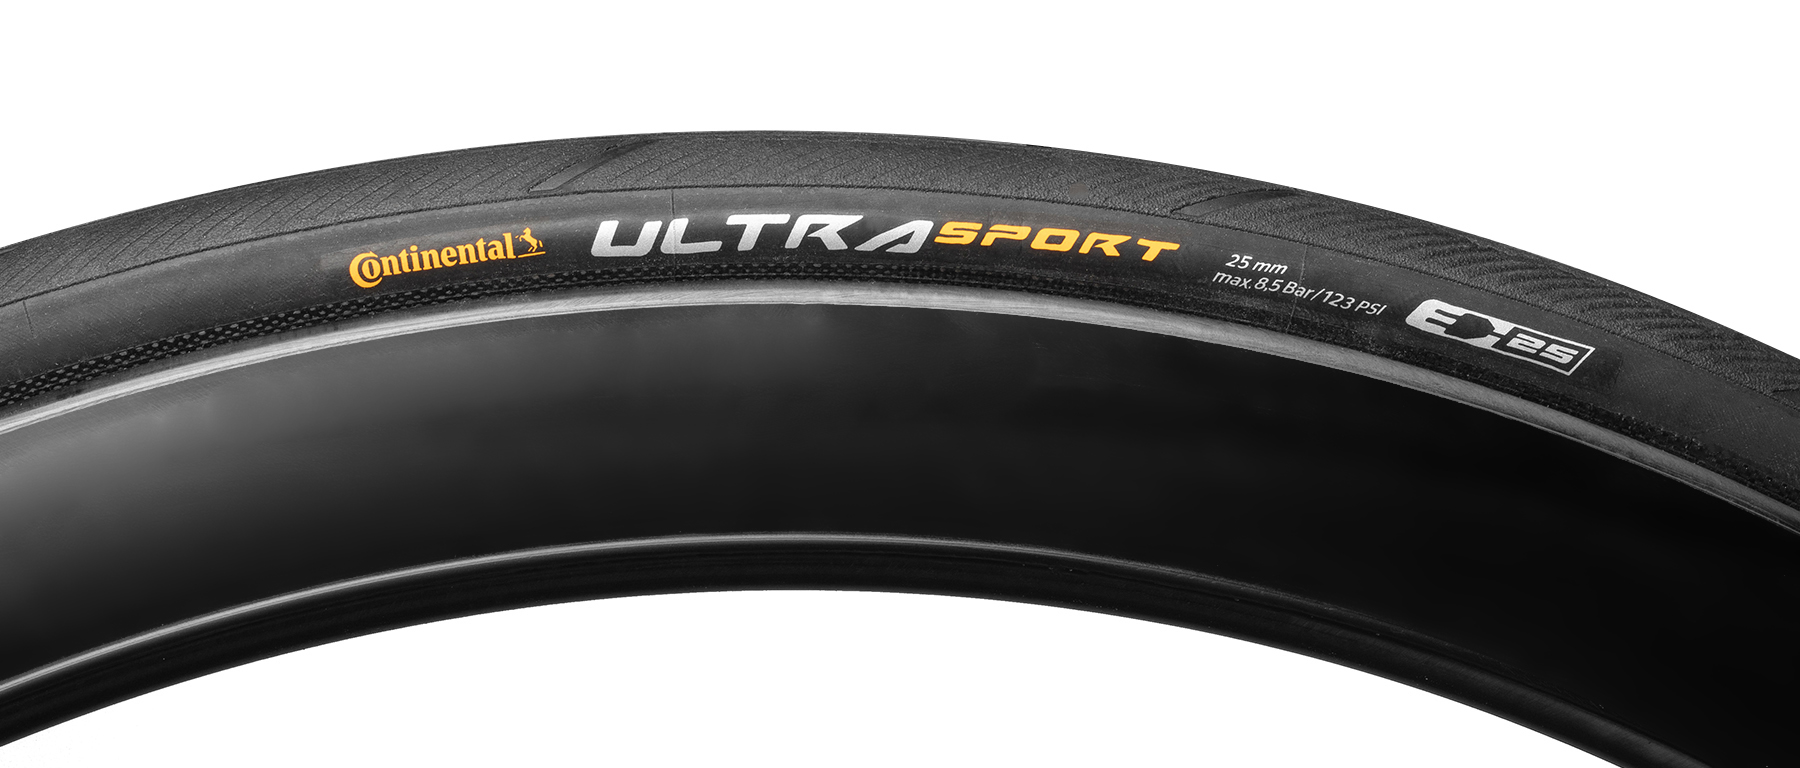 Continental Ultra Sport III Road Tire 2-Pack